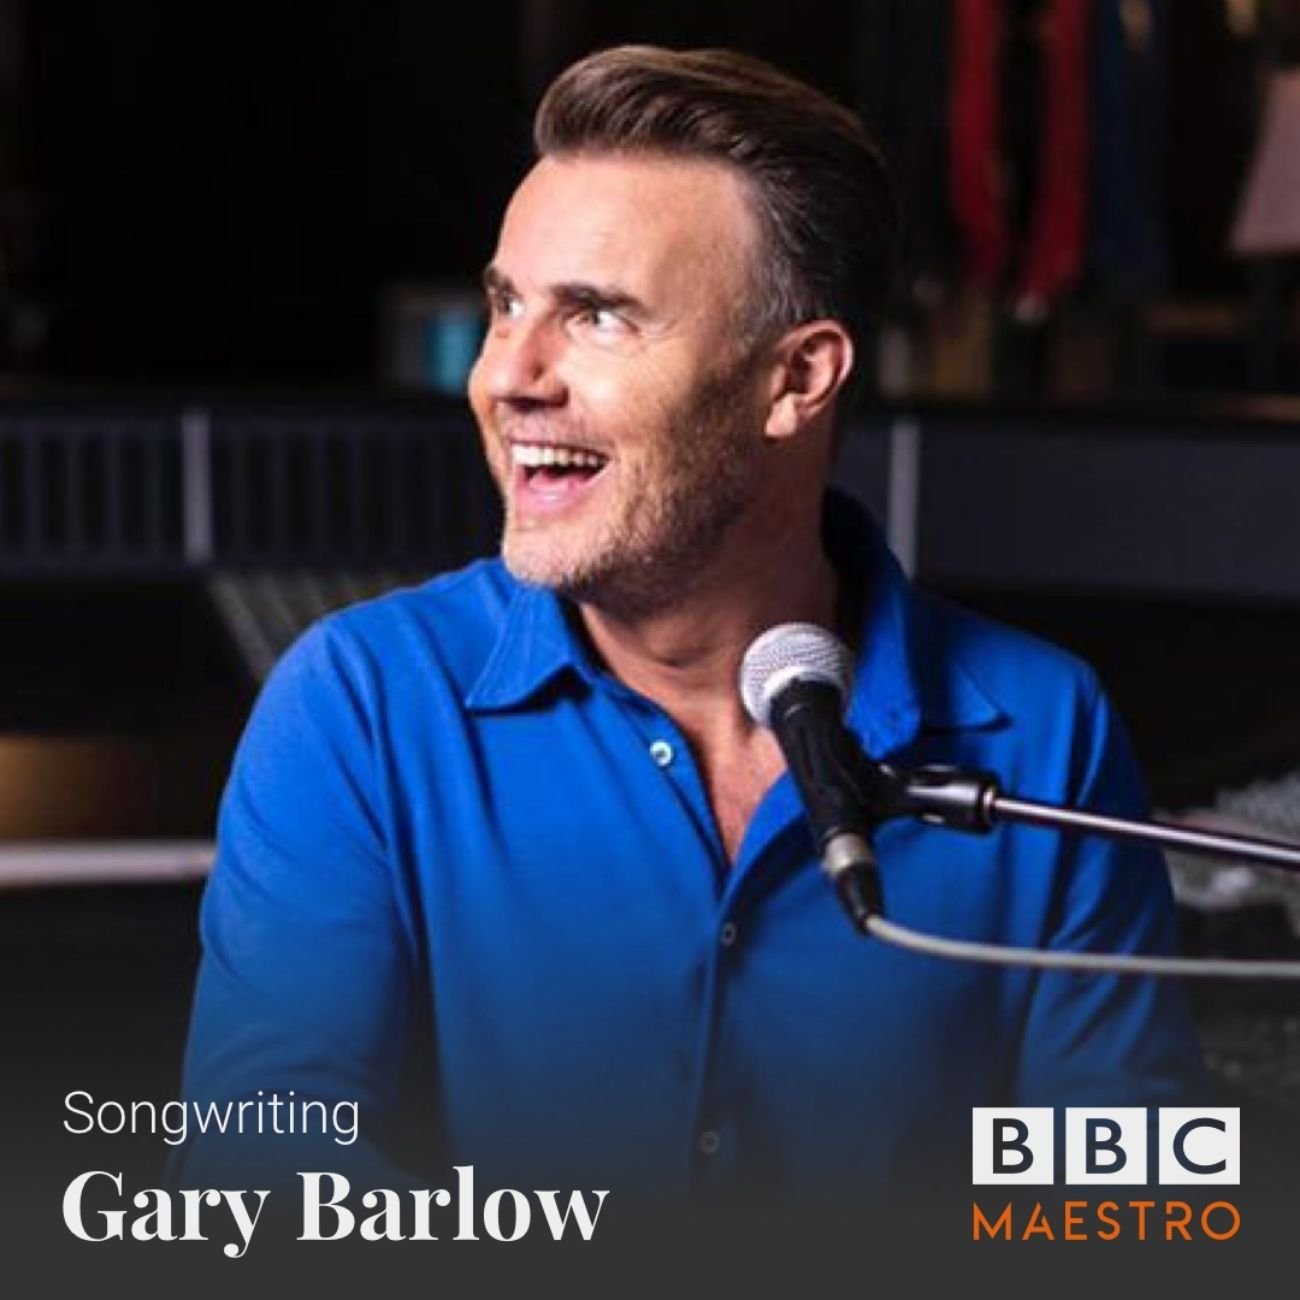 BBC Maestro Gary Barlow